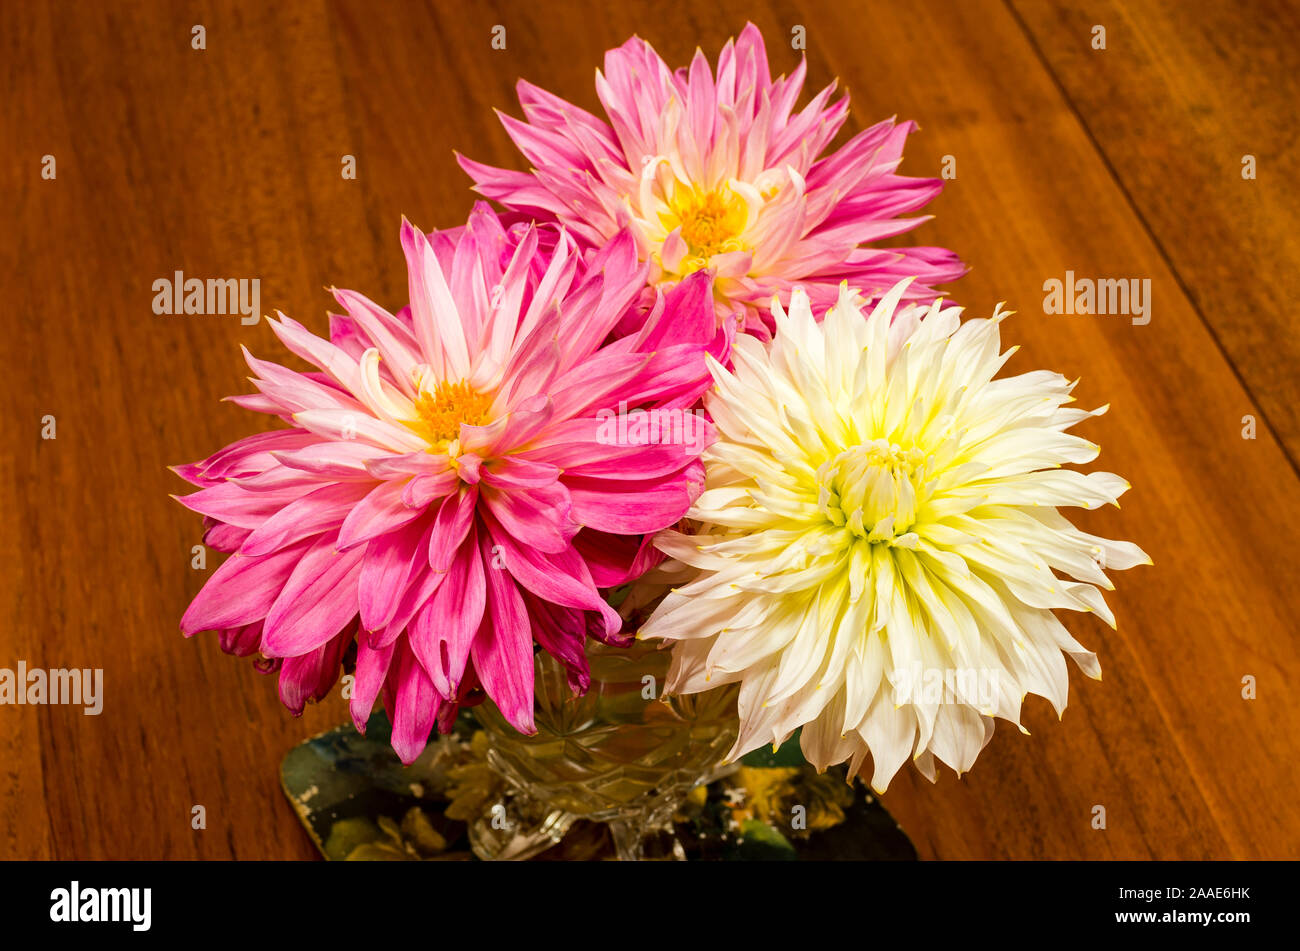 Dalias de doble flor fotografías e imágenes de alta resolución - Alamy